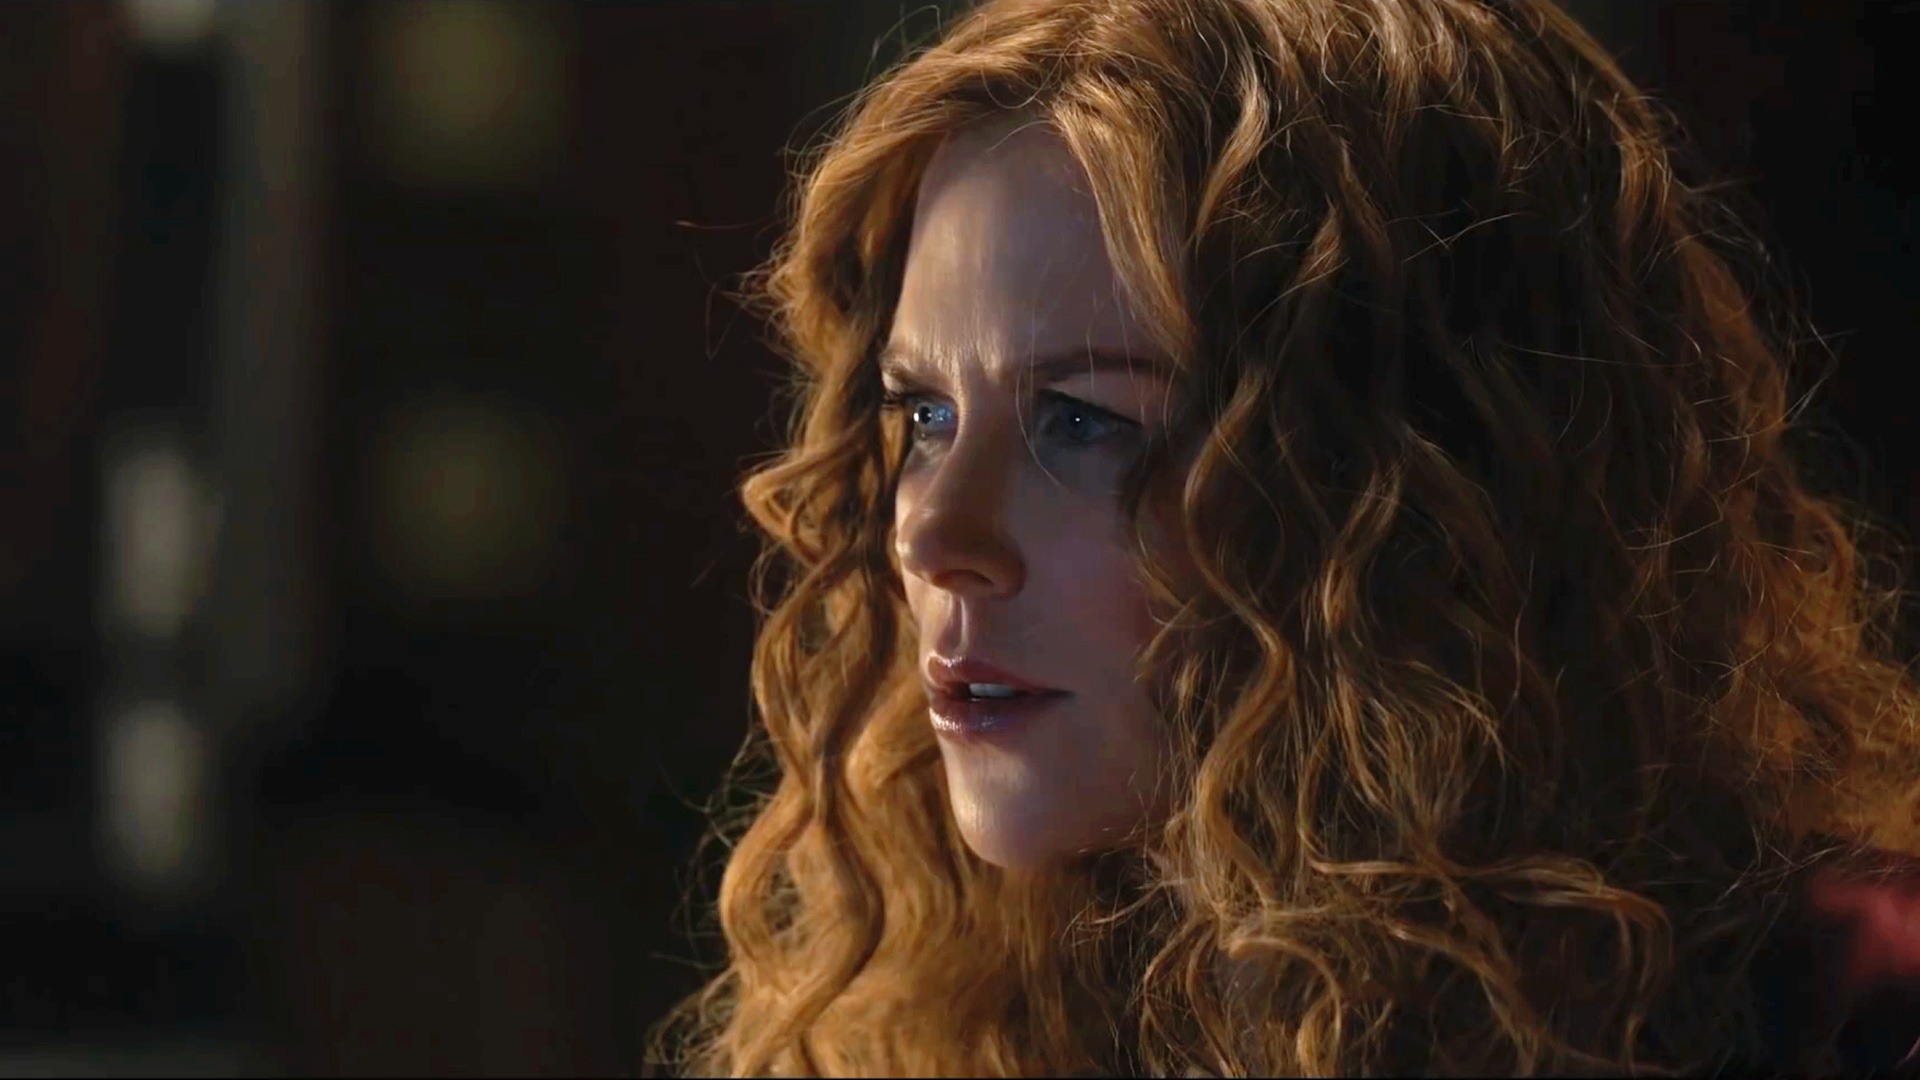 THE UNDOING Trailer # 2 (NEW 2020) Nicole Kidman, Hugh Grant, TV Series 